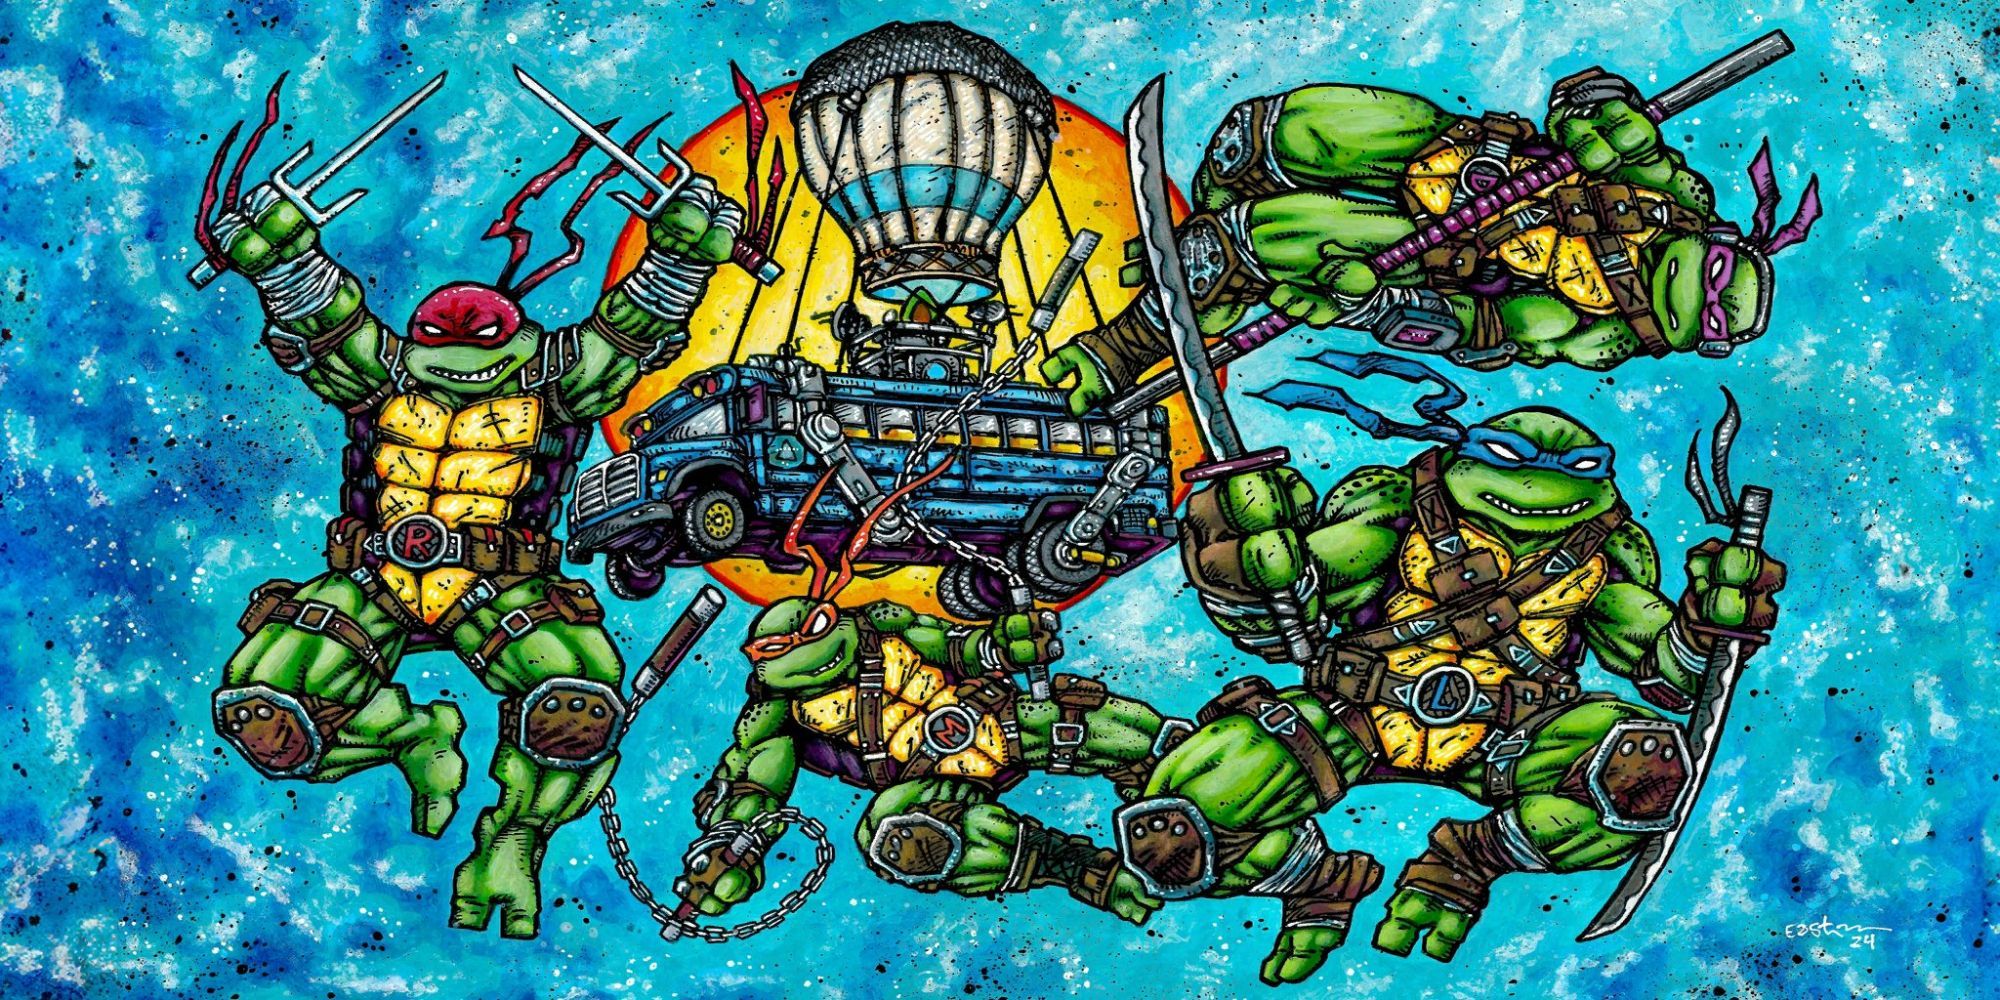 Fortnite x Teenage Mutant Ninja Turtles collab to arrive imminently -  ReadWrite